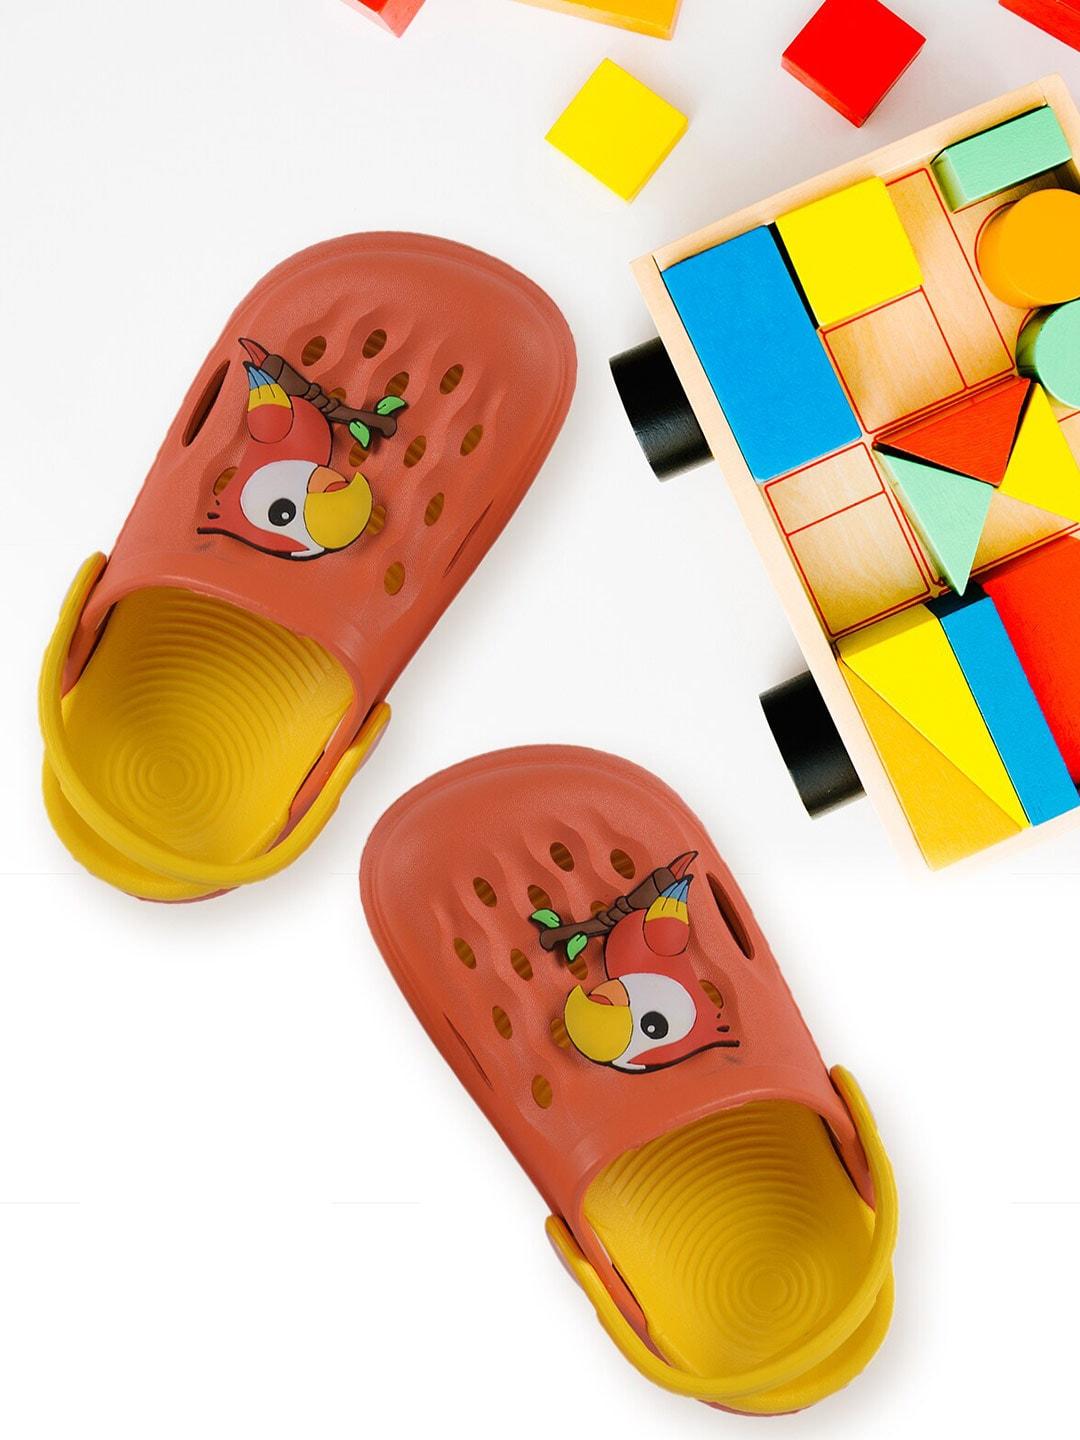 yellow-bee-boys-orange-clogs-sandals